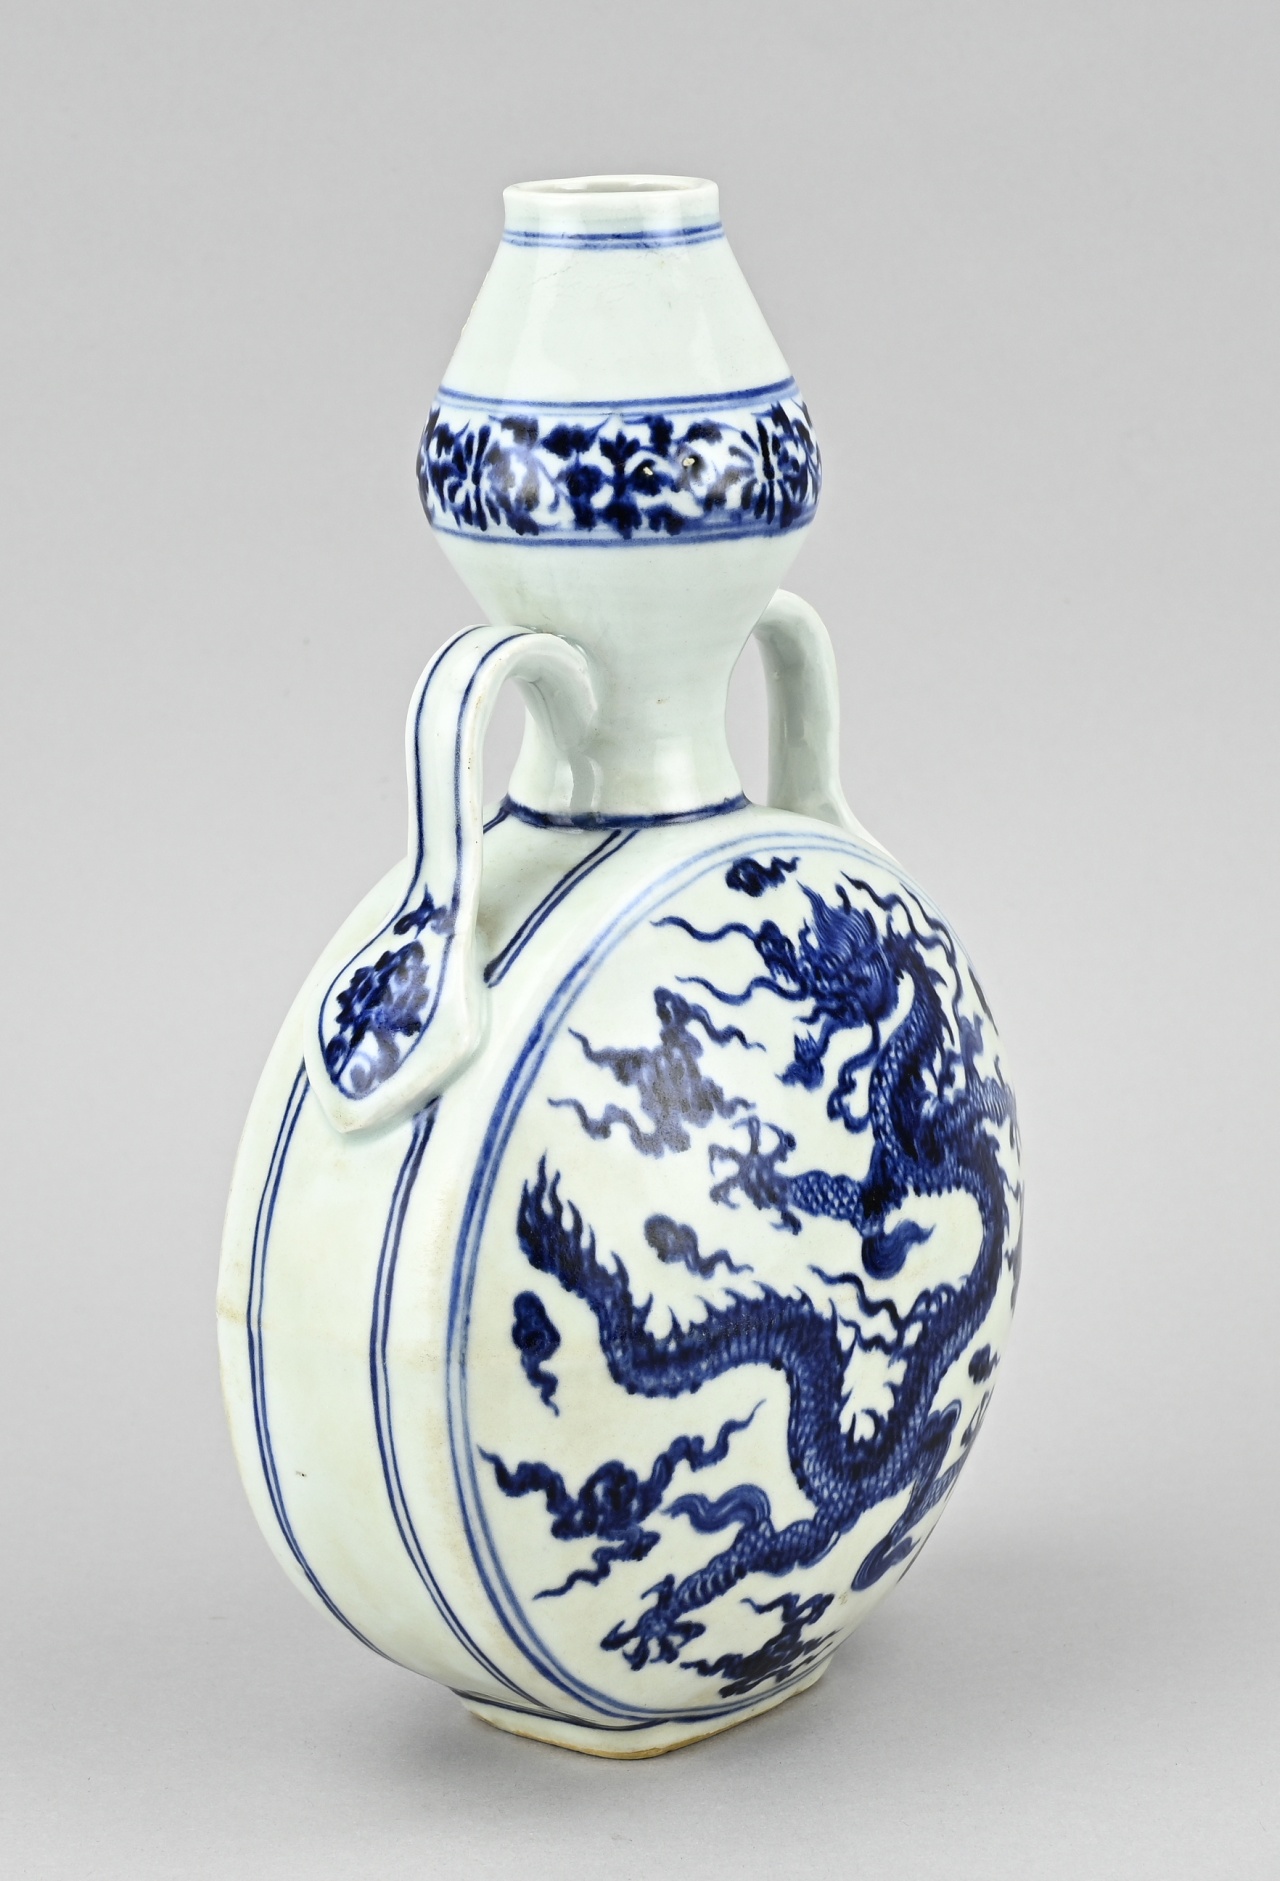 Dragon moon vase, H 28 cm. - Image 2 of 3